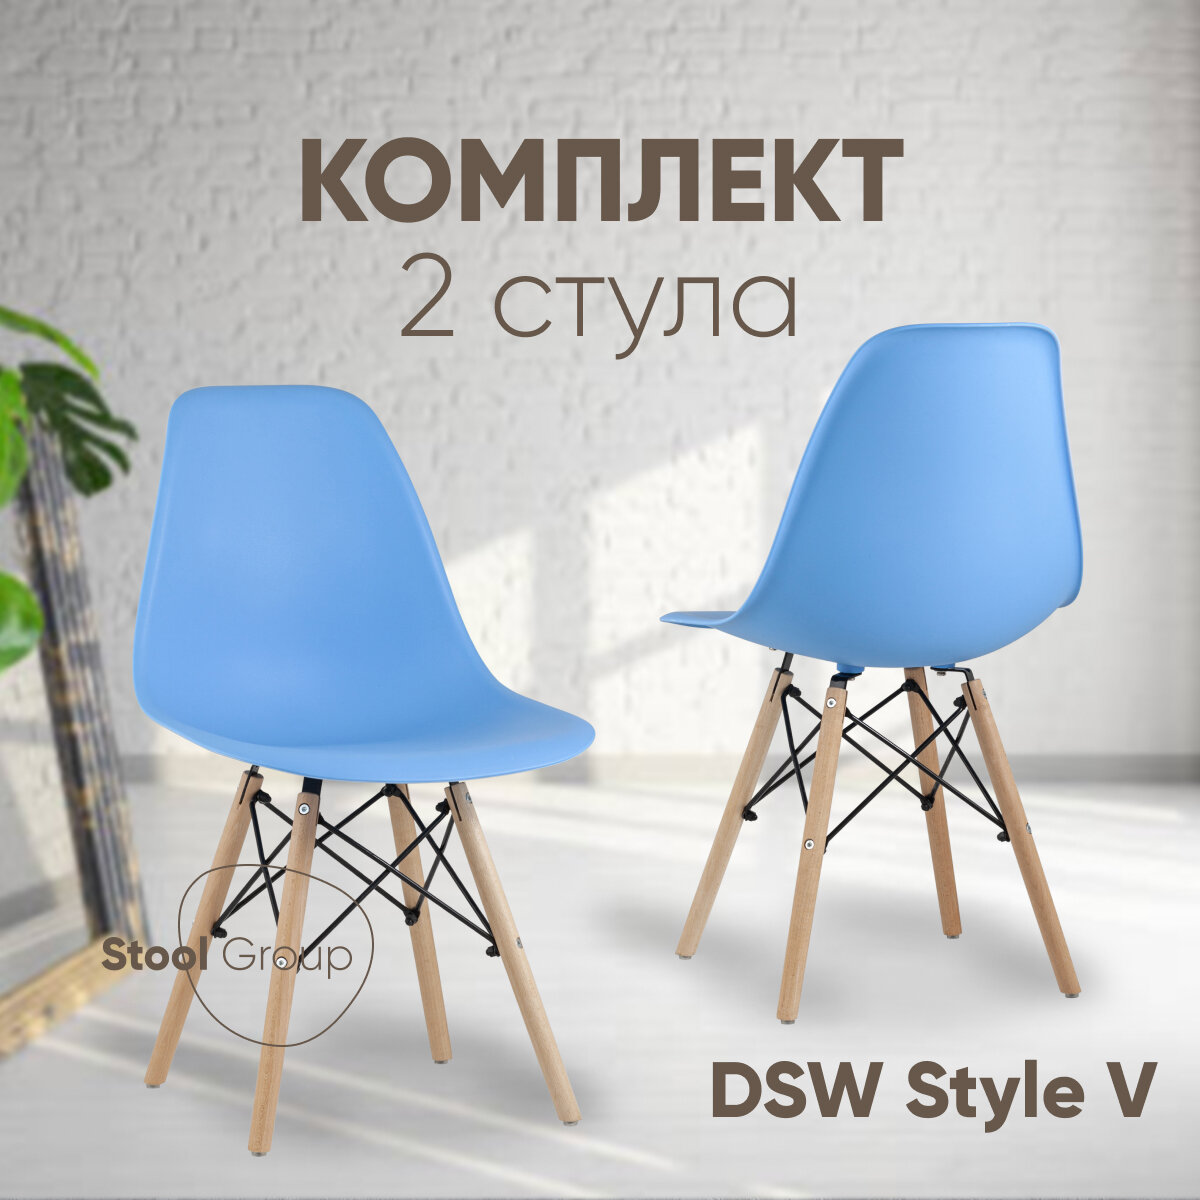 Стул для кухни DSW Style V, голубой (комплект 2 стула)